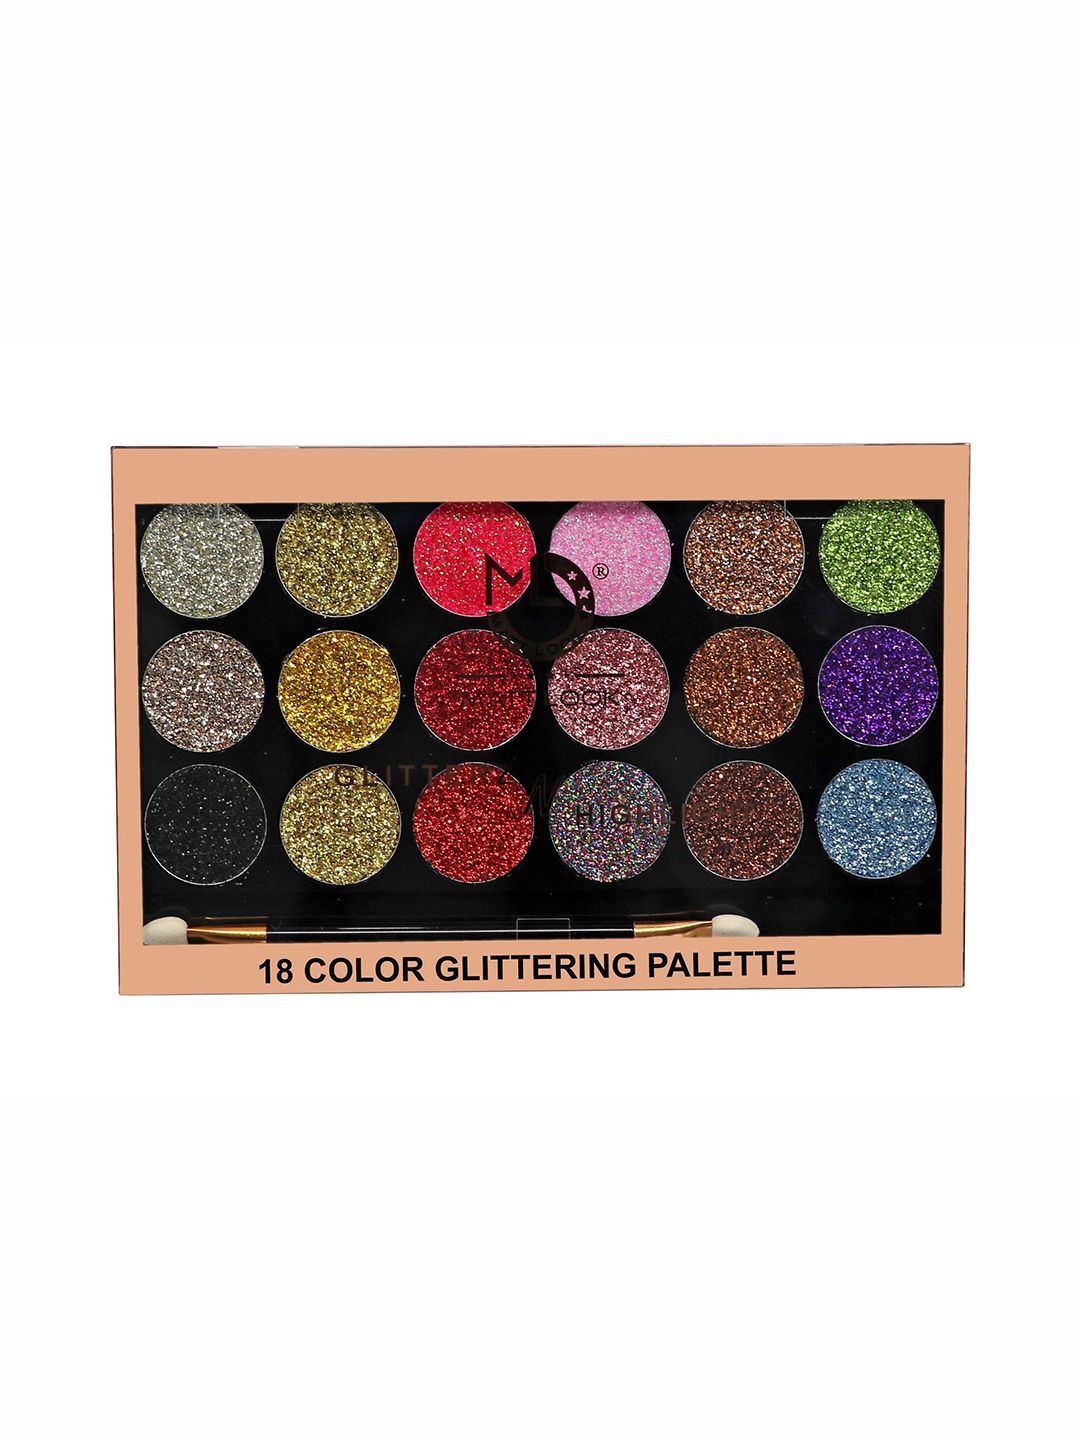 MATTLOOK Multicoloured Glitterz N Highlight 18 Color Glittering Eyeshadow Palette - 18 gm Price in India